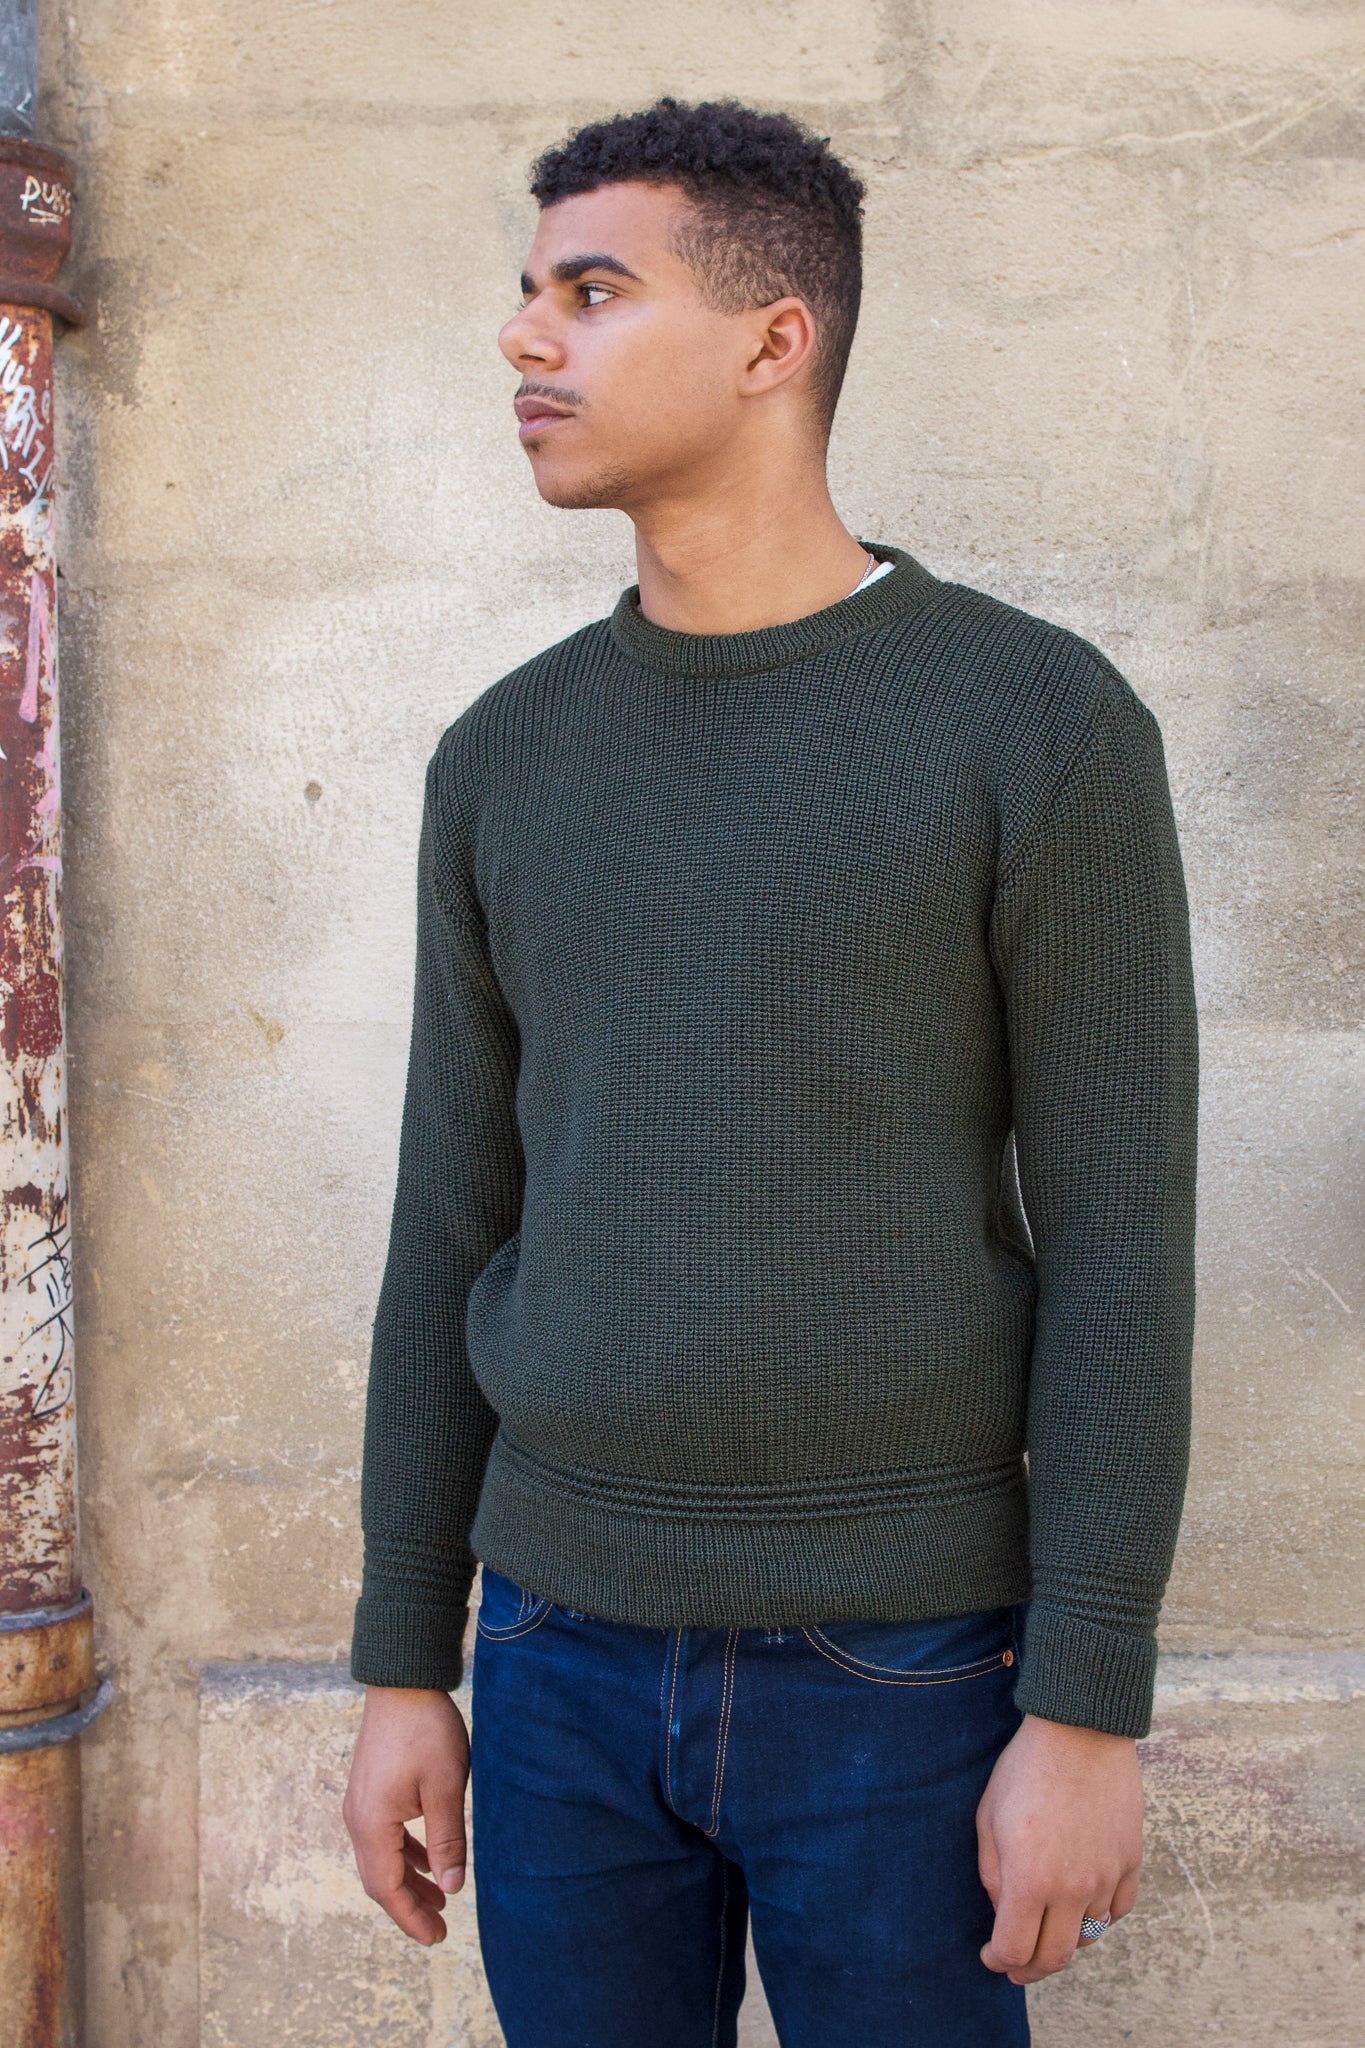 Rundhals Green Military Sweater bleubrut – Wool Virgin -